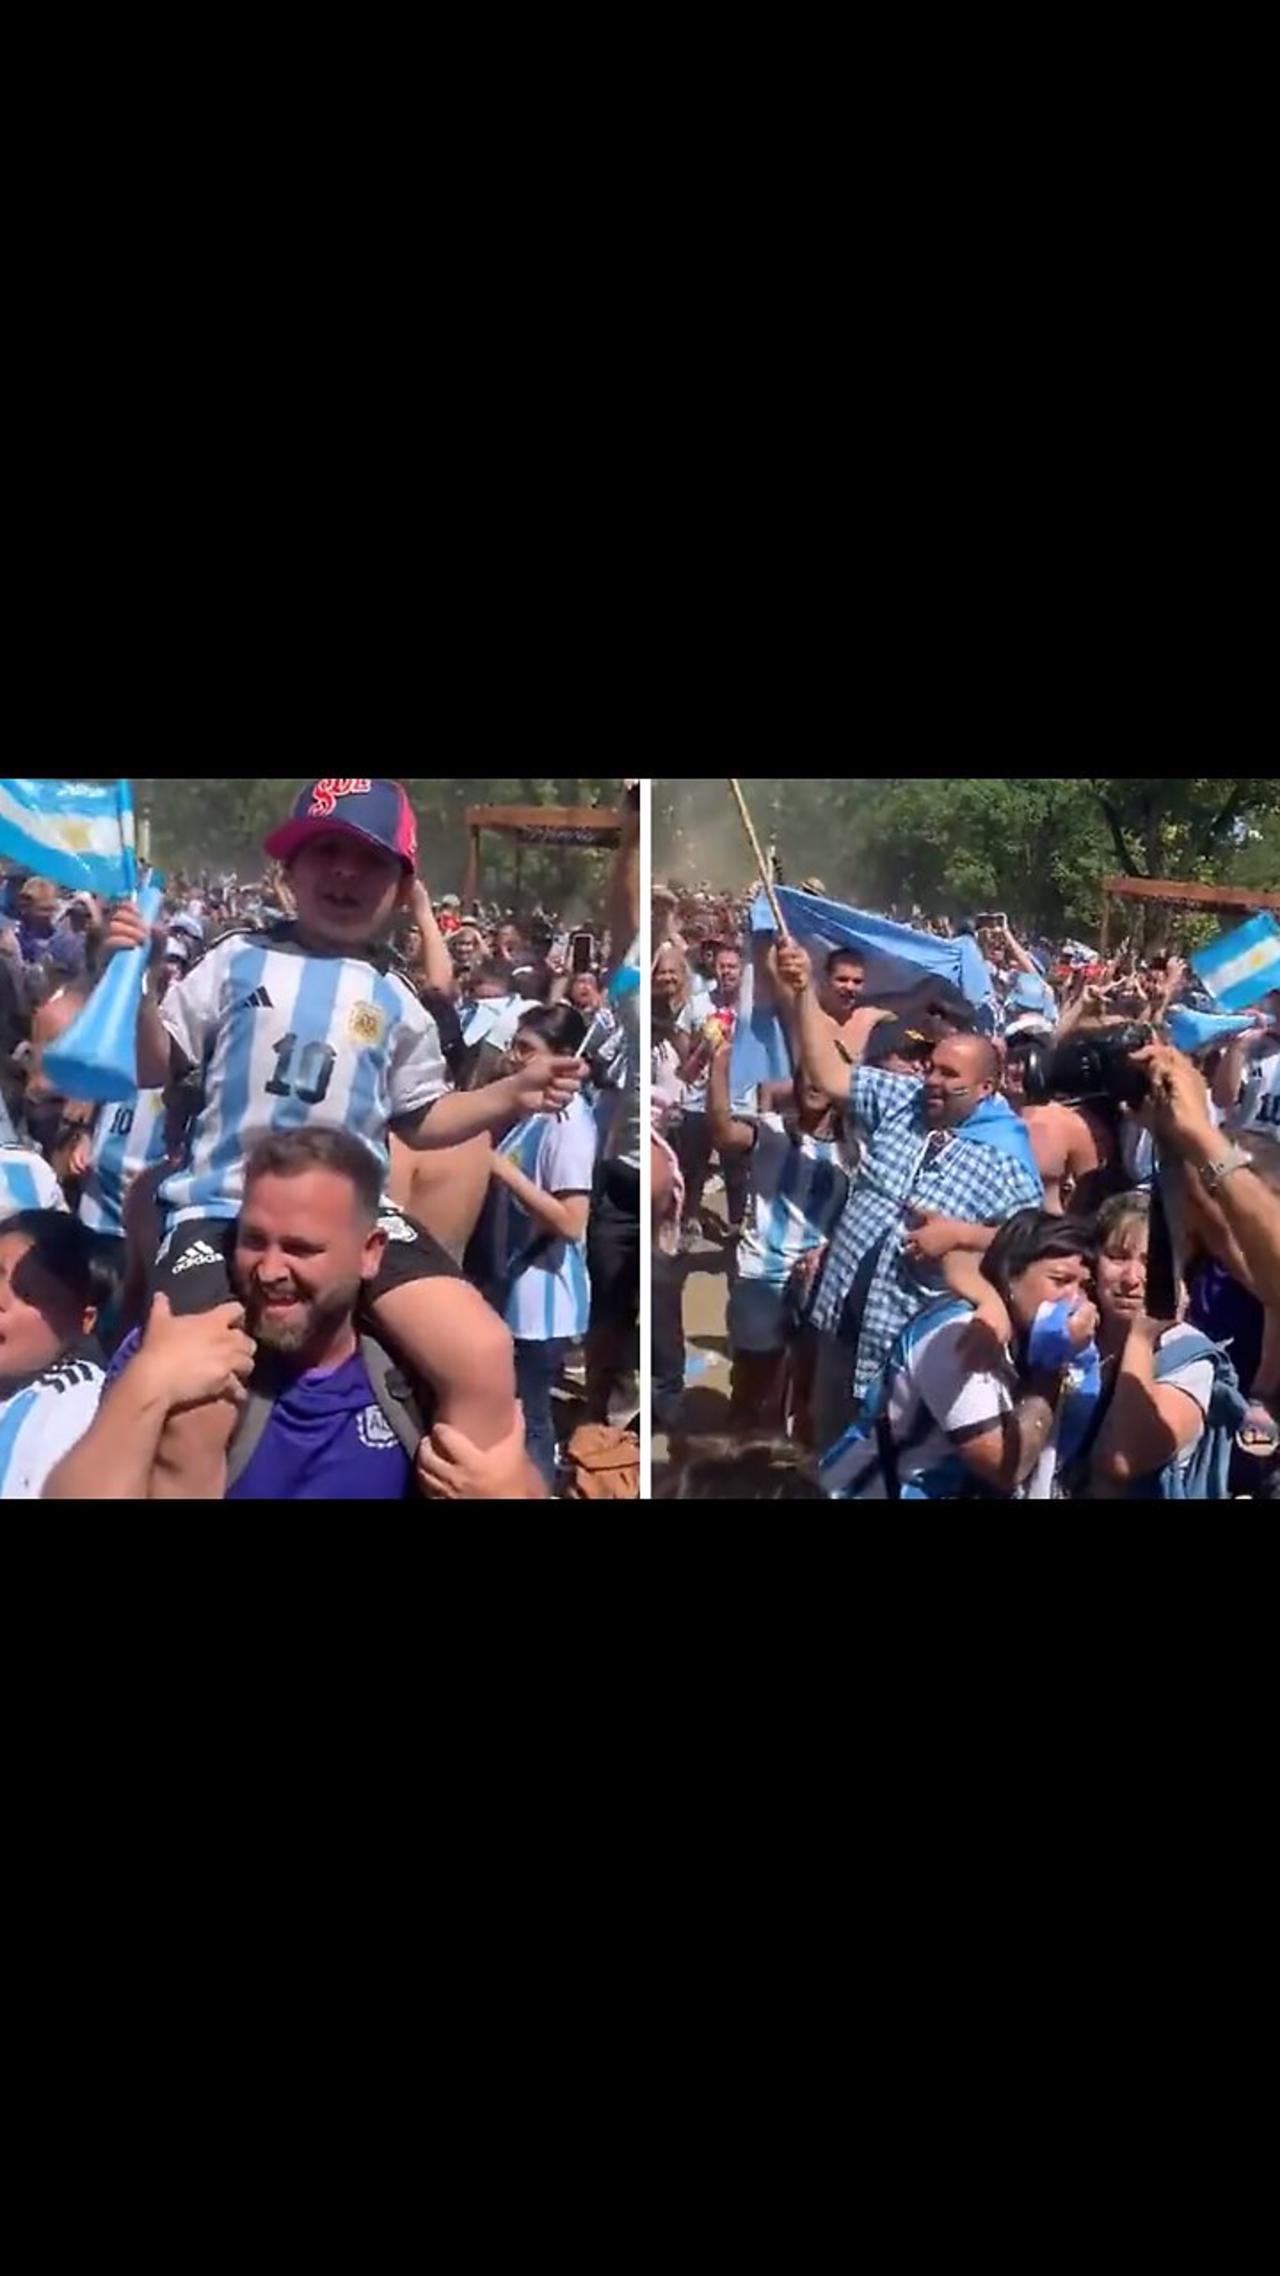 Argentina fans live celebration of World Cup victory